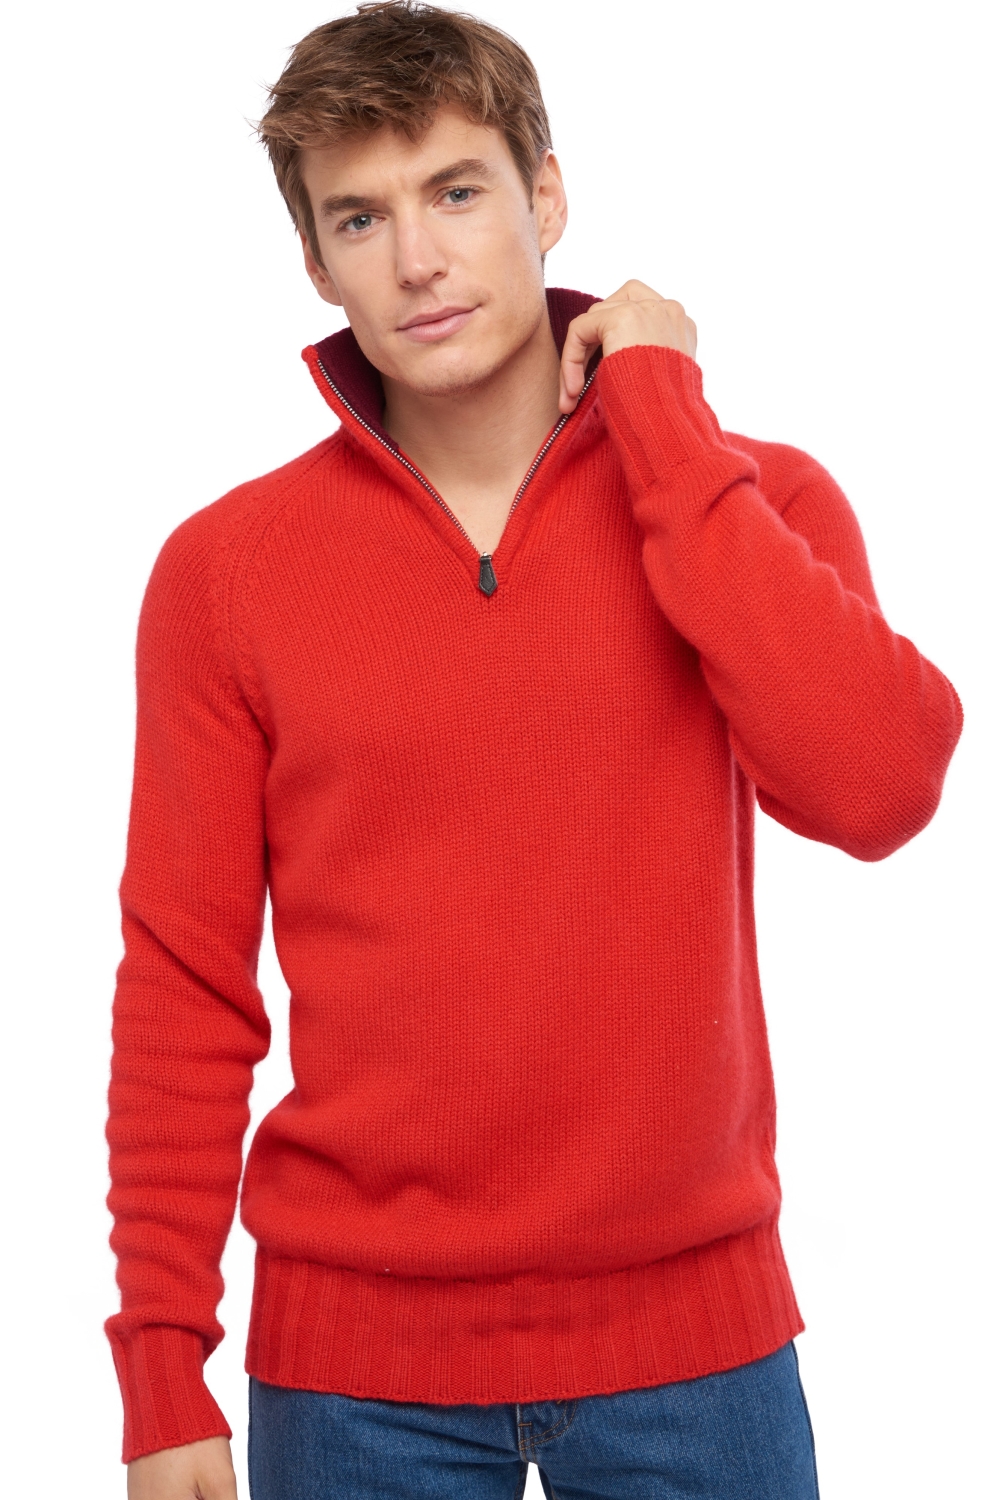 Cashmere men polo style sweaters olivier rouge bordeaux m